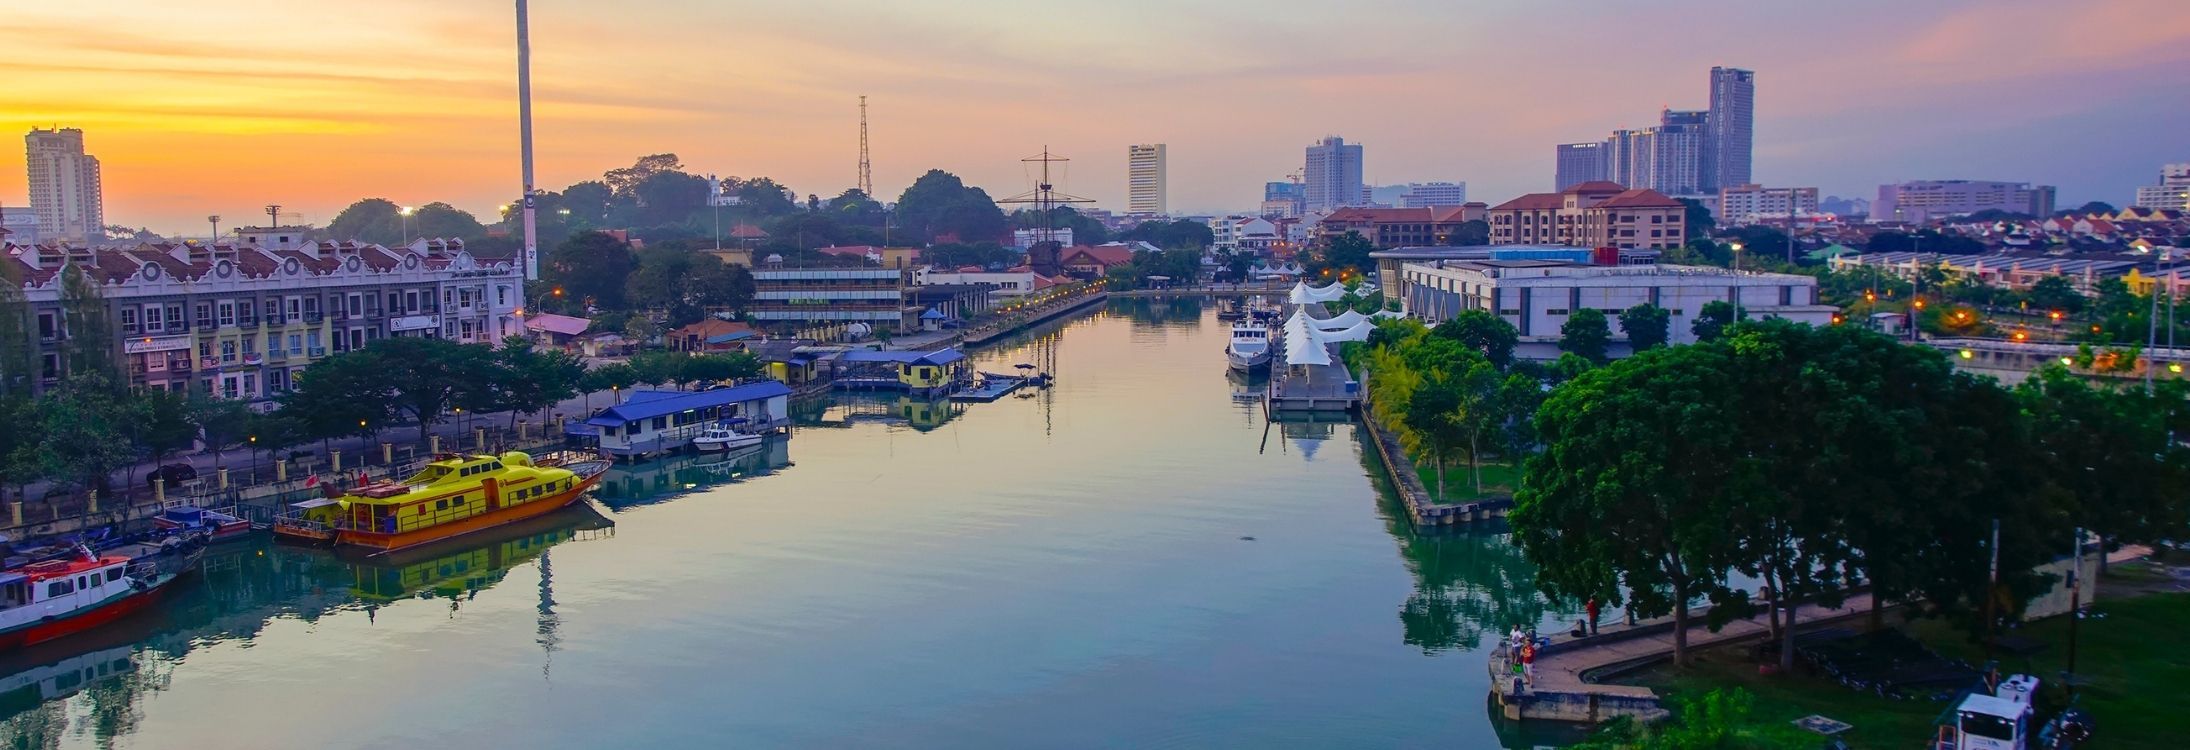 5 Beautiful Cities Of Malaysia 